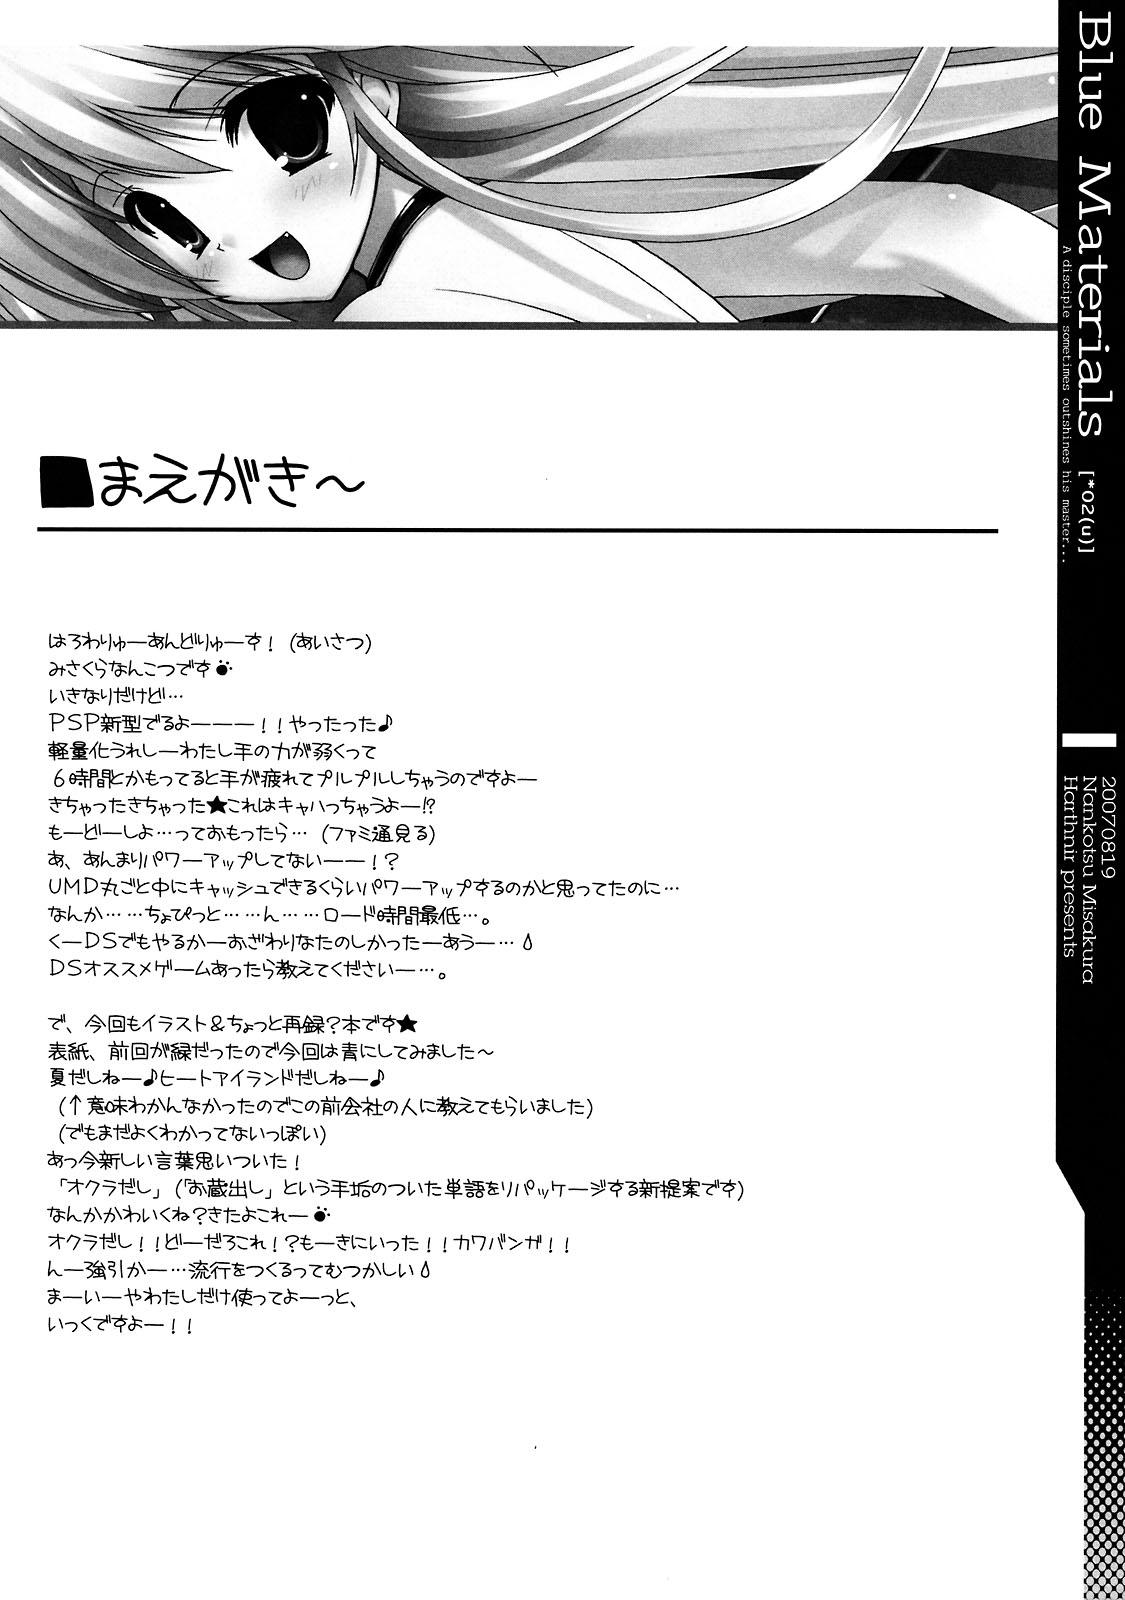 Gay Blue Materials. - Code geass Samurai spirits Rozen maiden Higurashi no naku koro ni Star ocean Moekan Everybodys tennis Anal Gape - Page 4